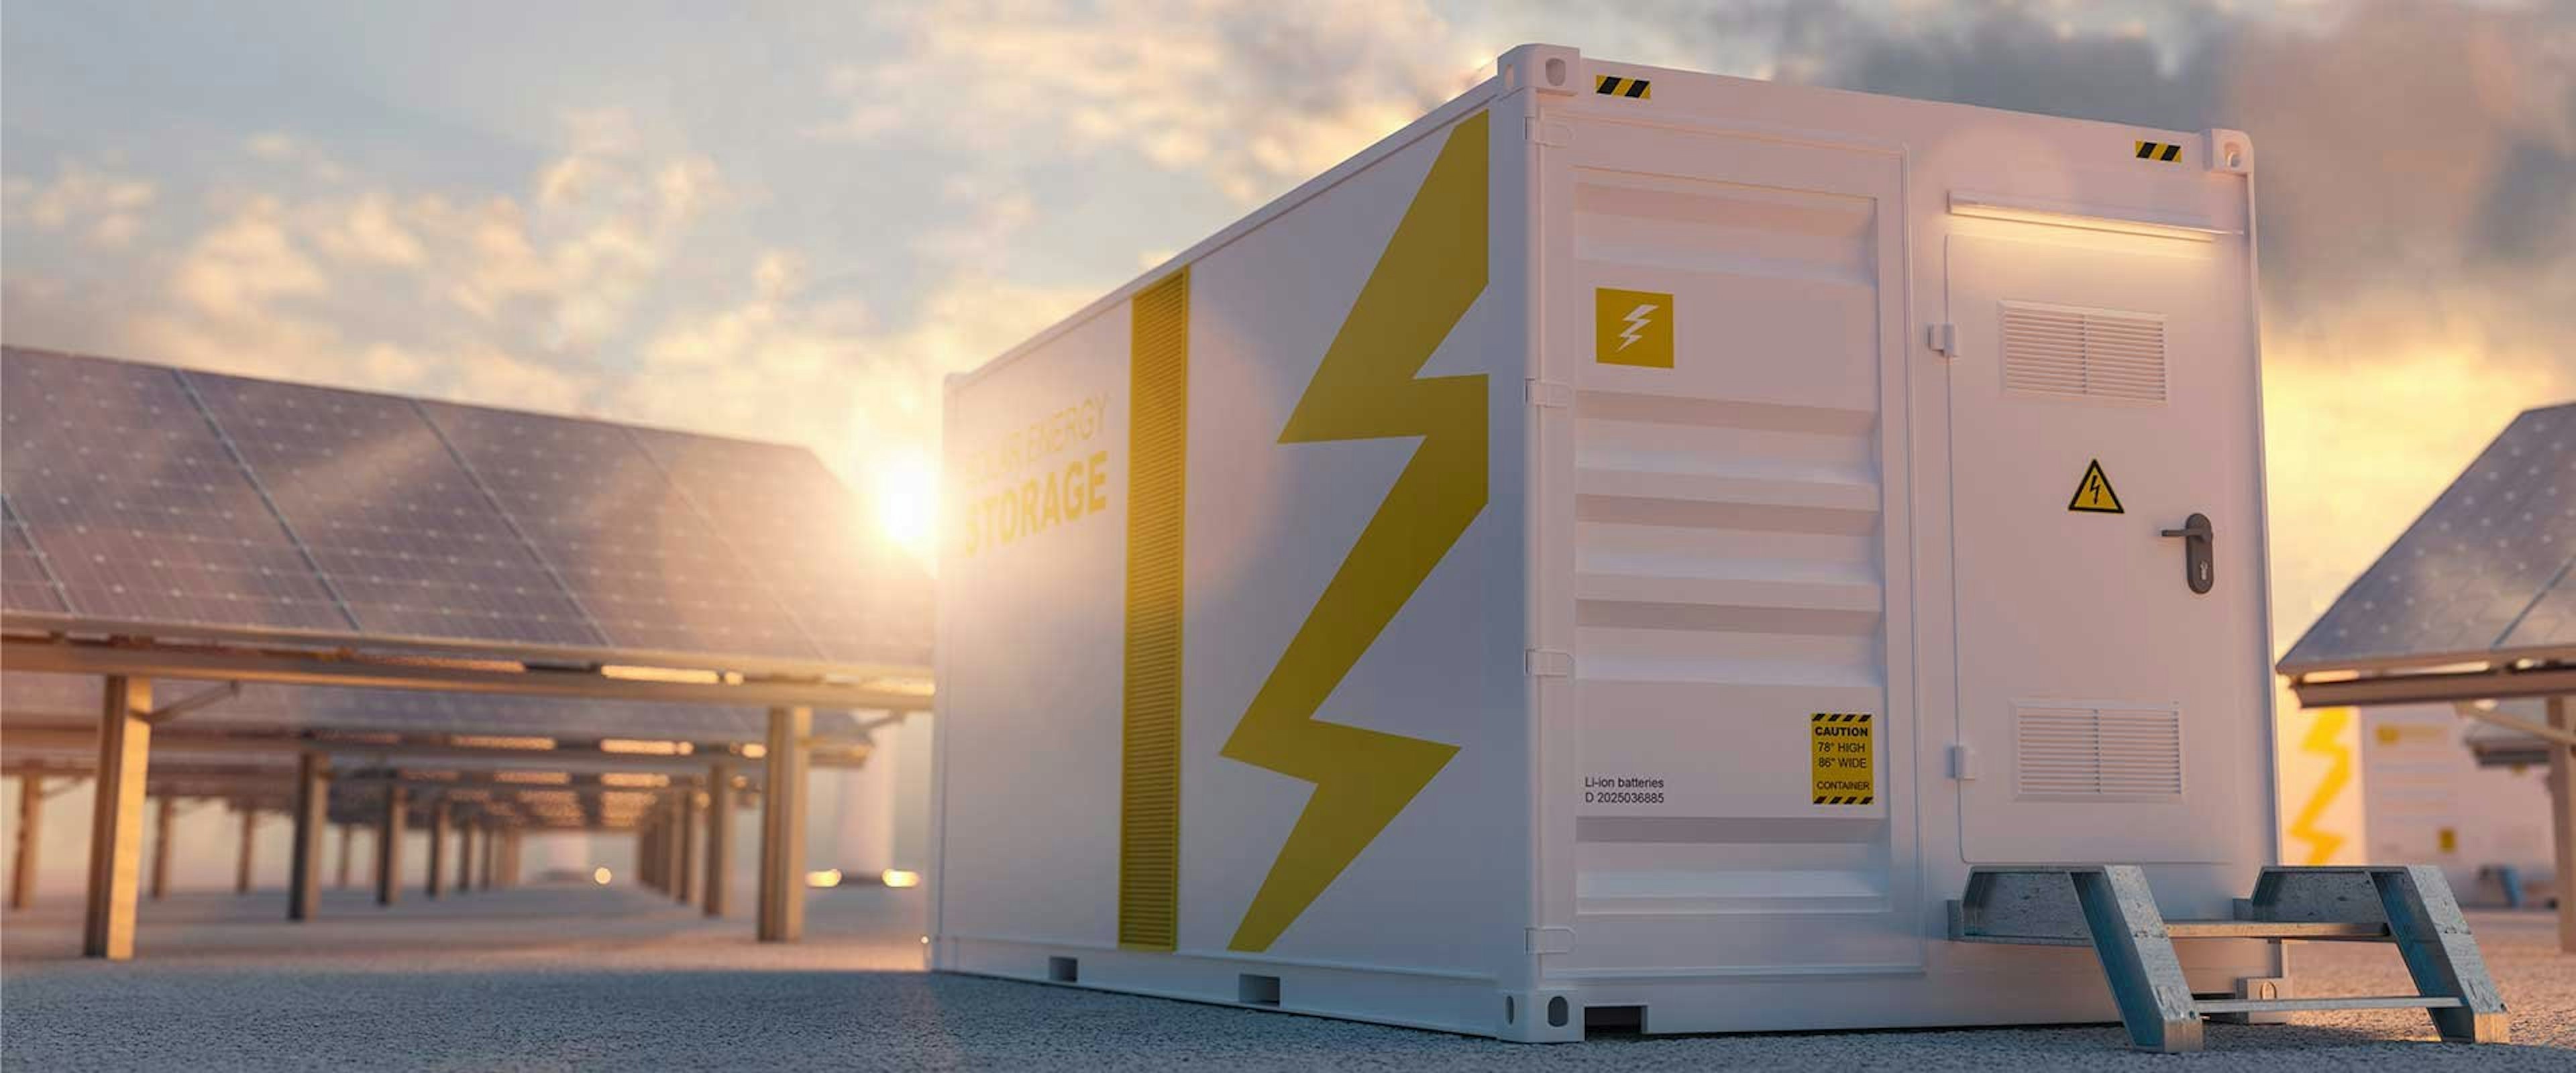 Renewable energy storage vanadium battery